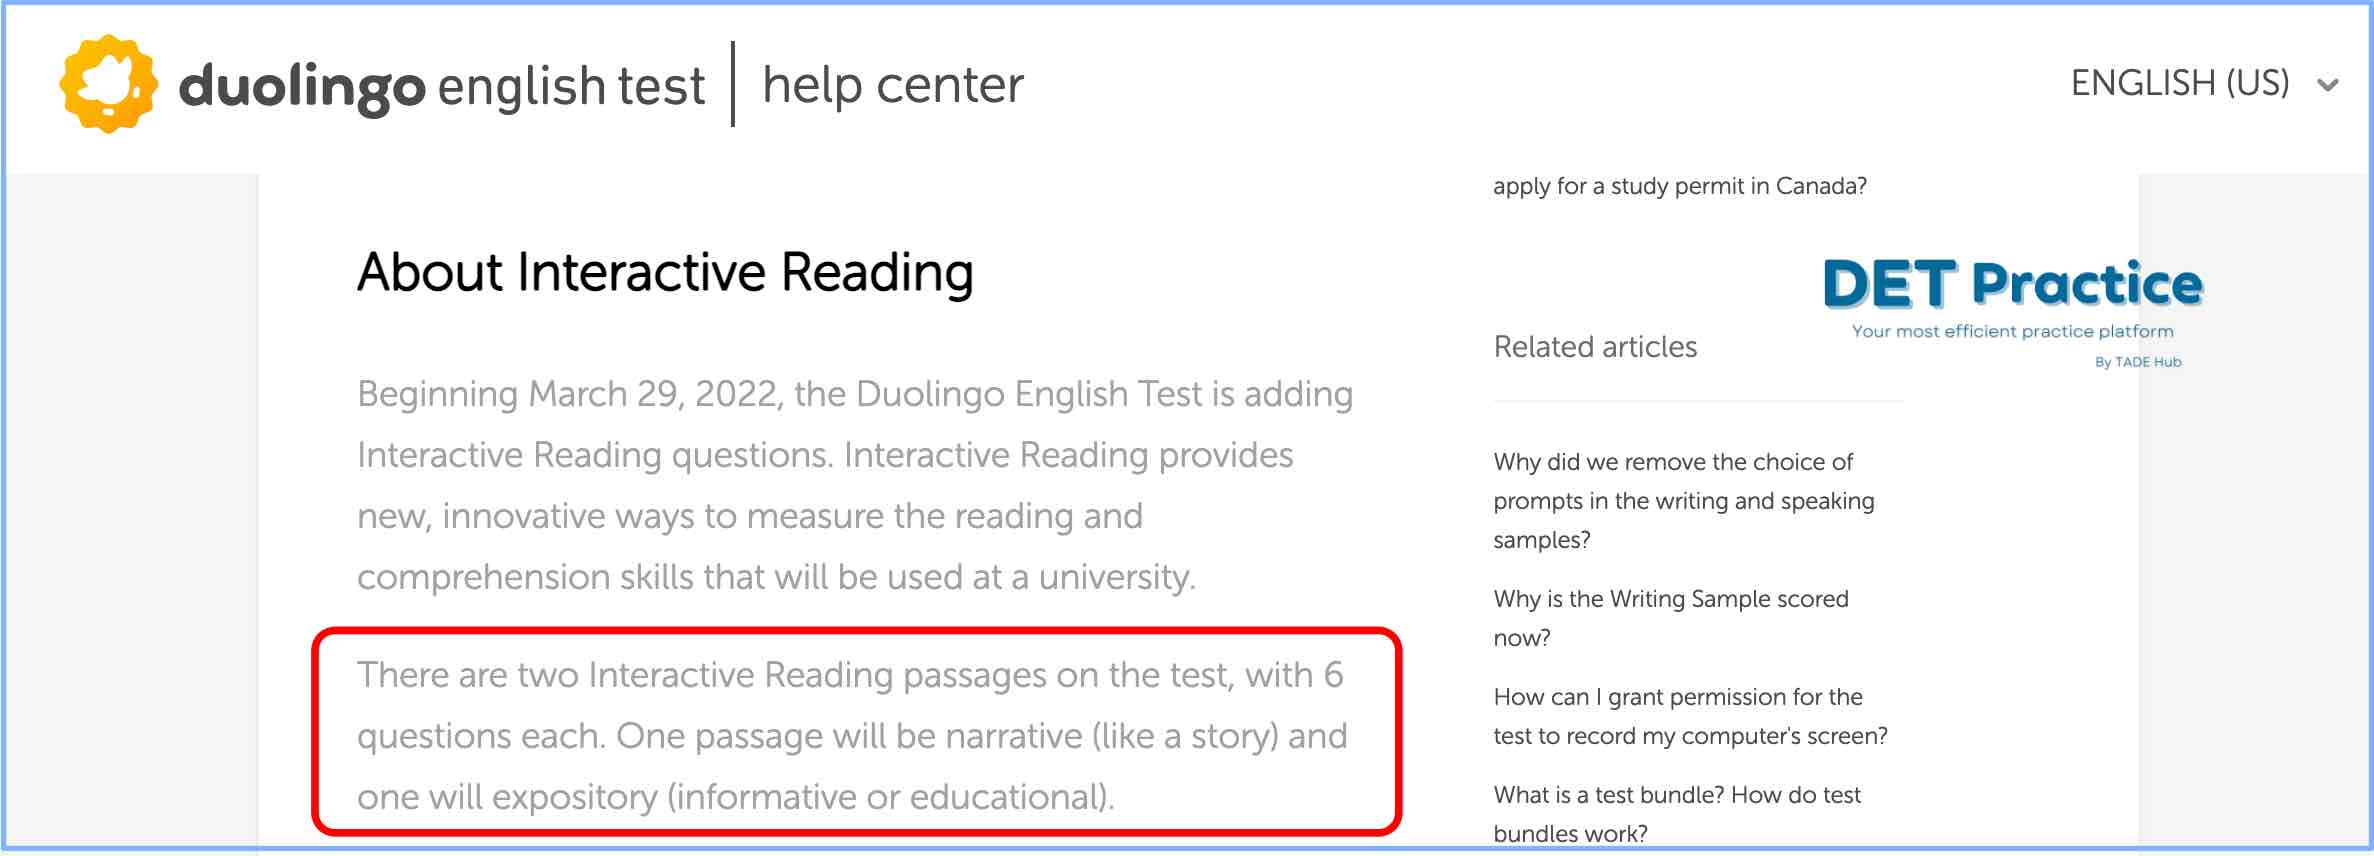 Interactive Reading topics, Duolingo Test preparation, DET platform, duolingo question types, DET Practice platform